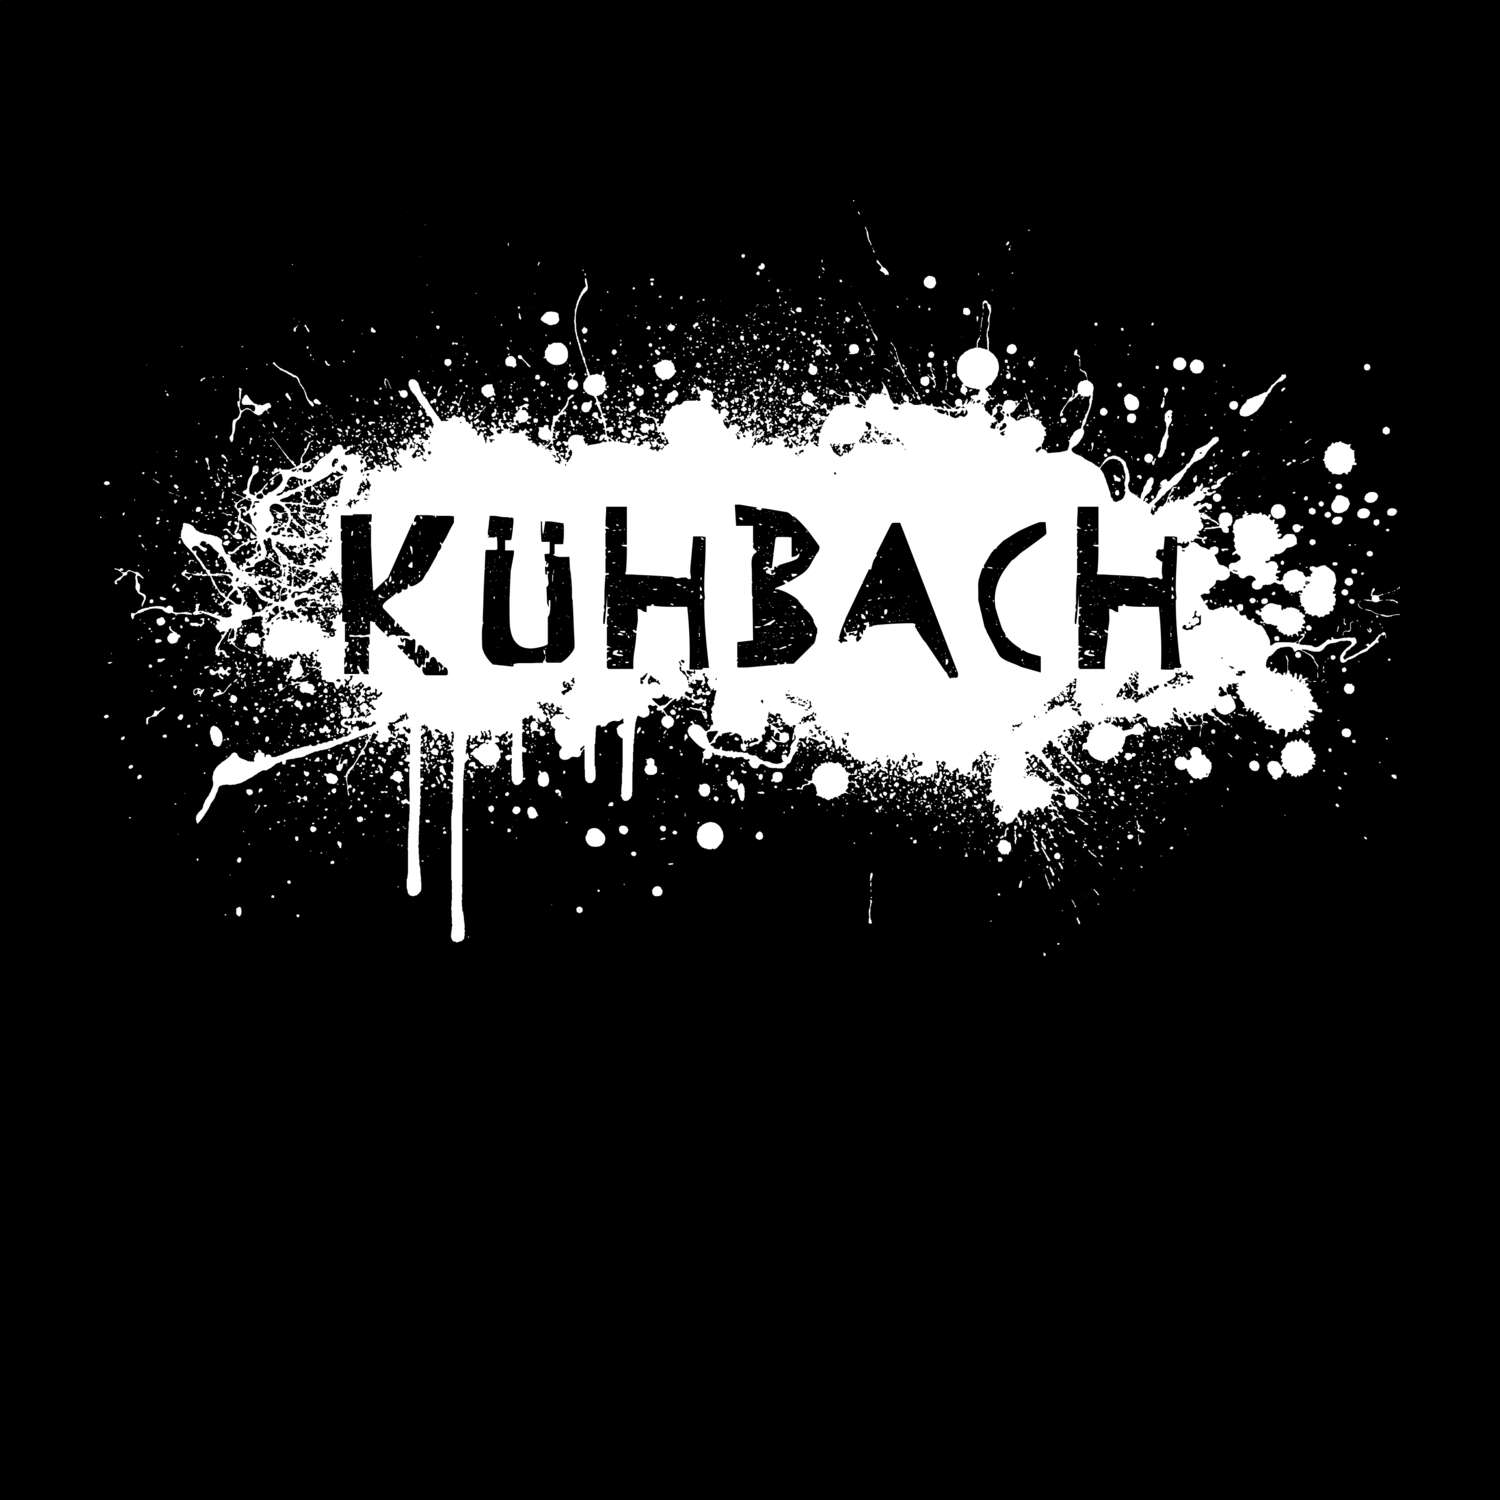 Kühbach T-Shirt »Paint Splash Punk«